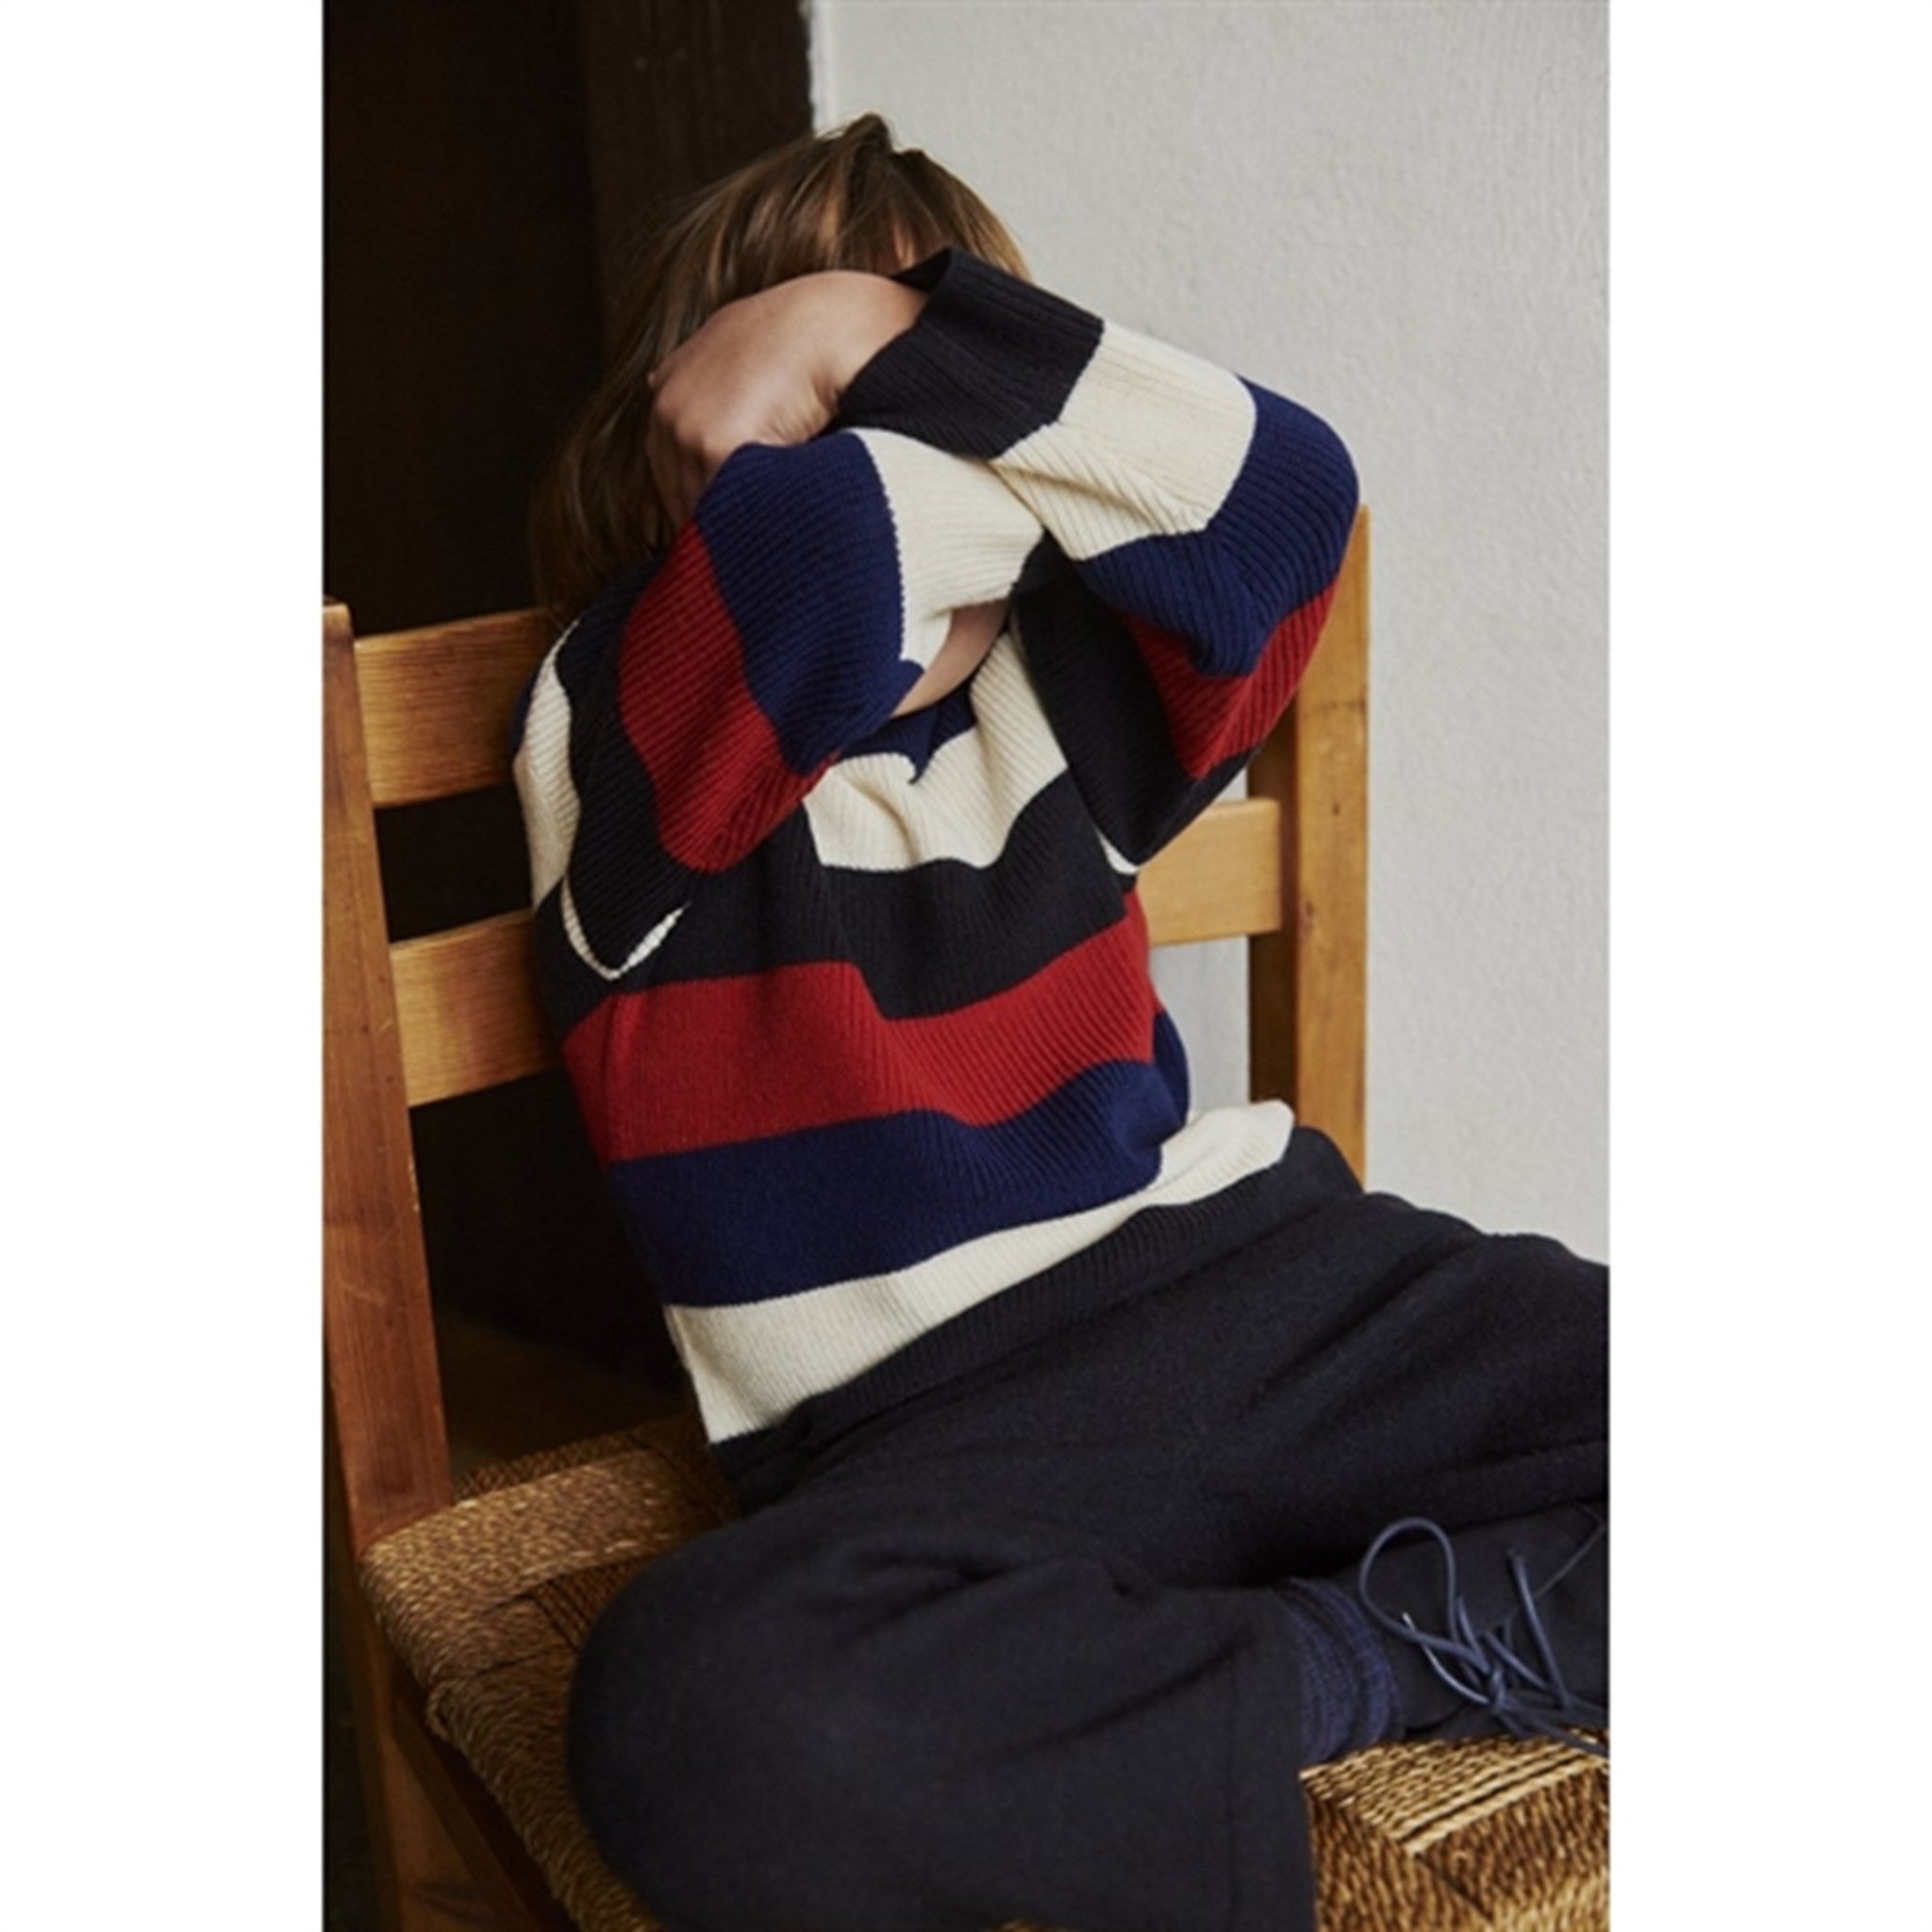 FUB Multistriped Knitted Sweater Dark Navy/Ecru/Royal Blue/Bright Red 2